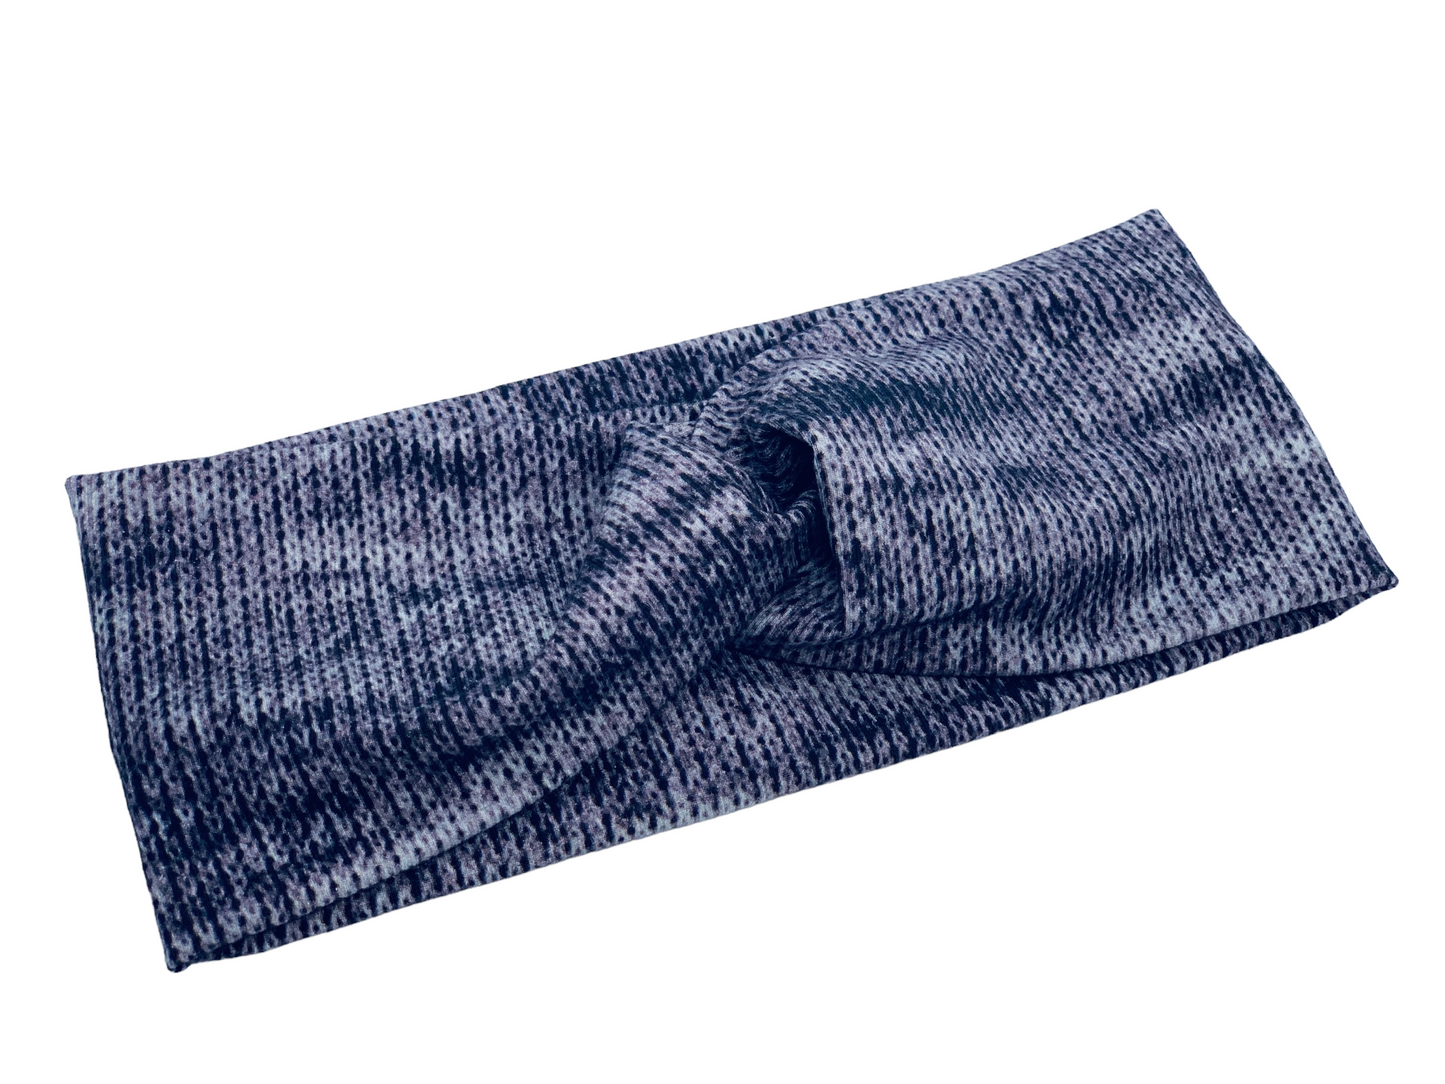 Charcoal Knit Headband-Twist or Yoga  |  Sweet Stitch Novelties